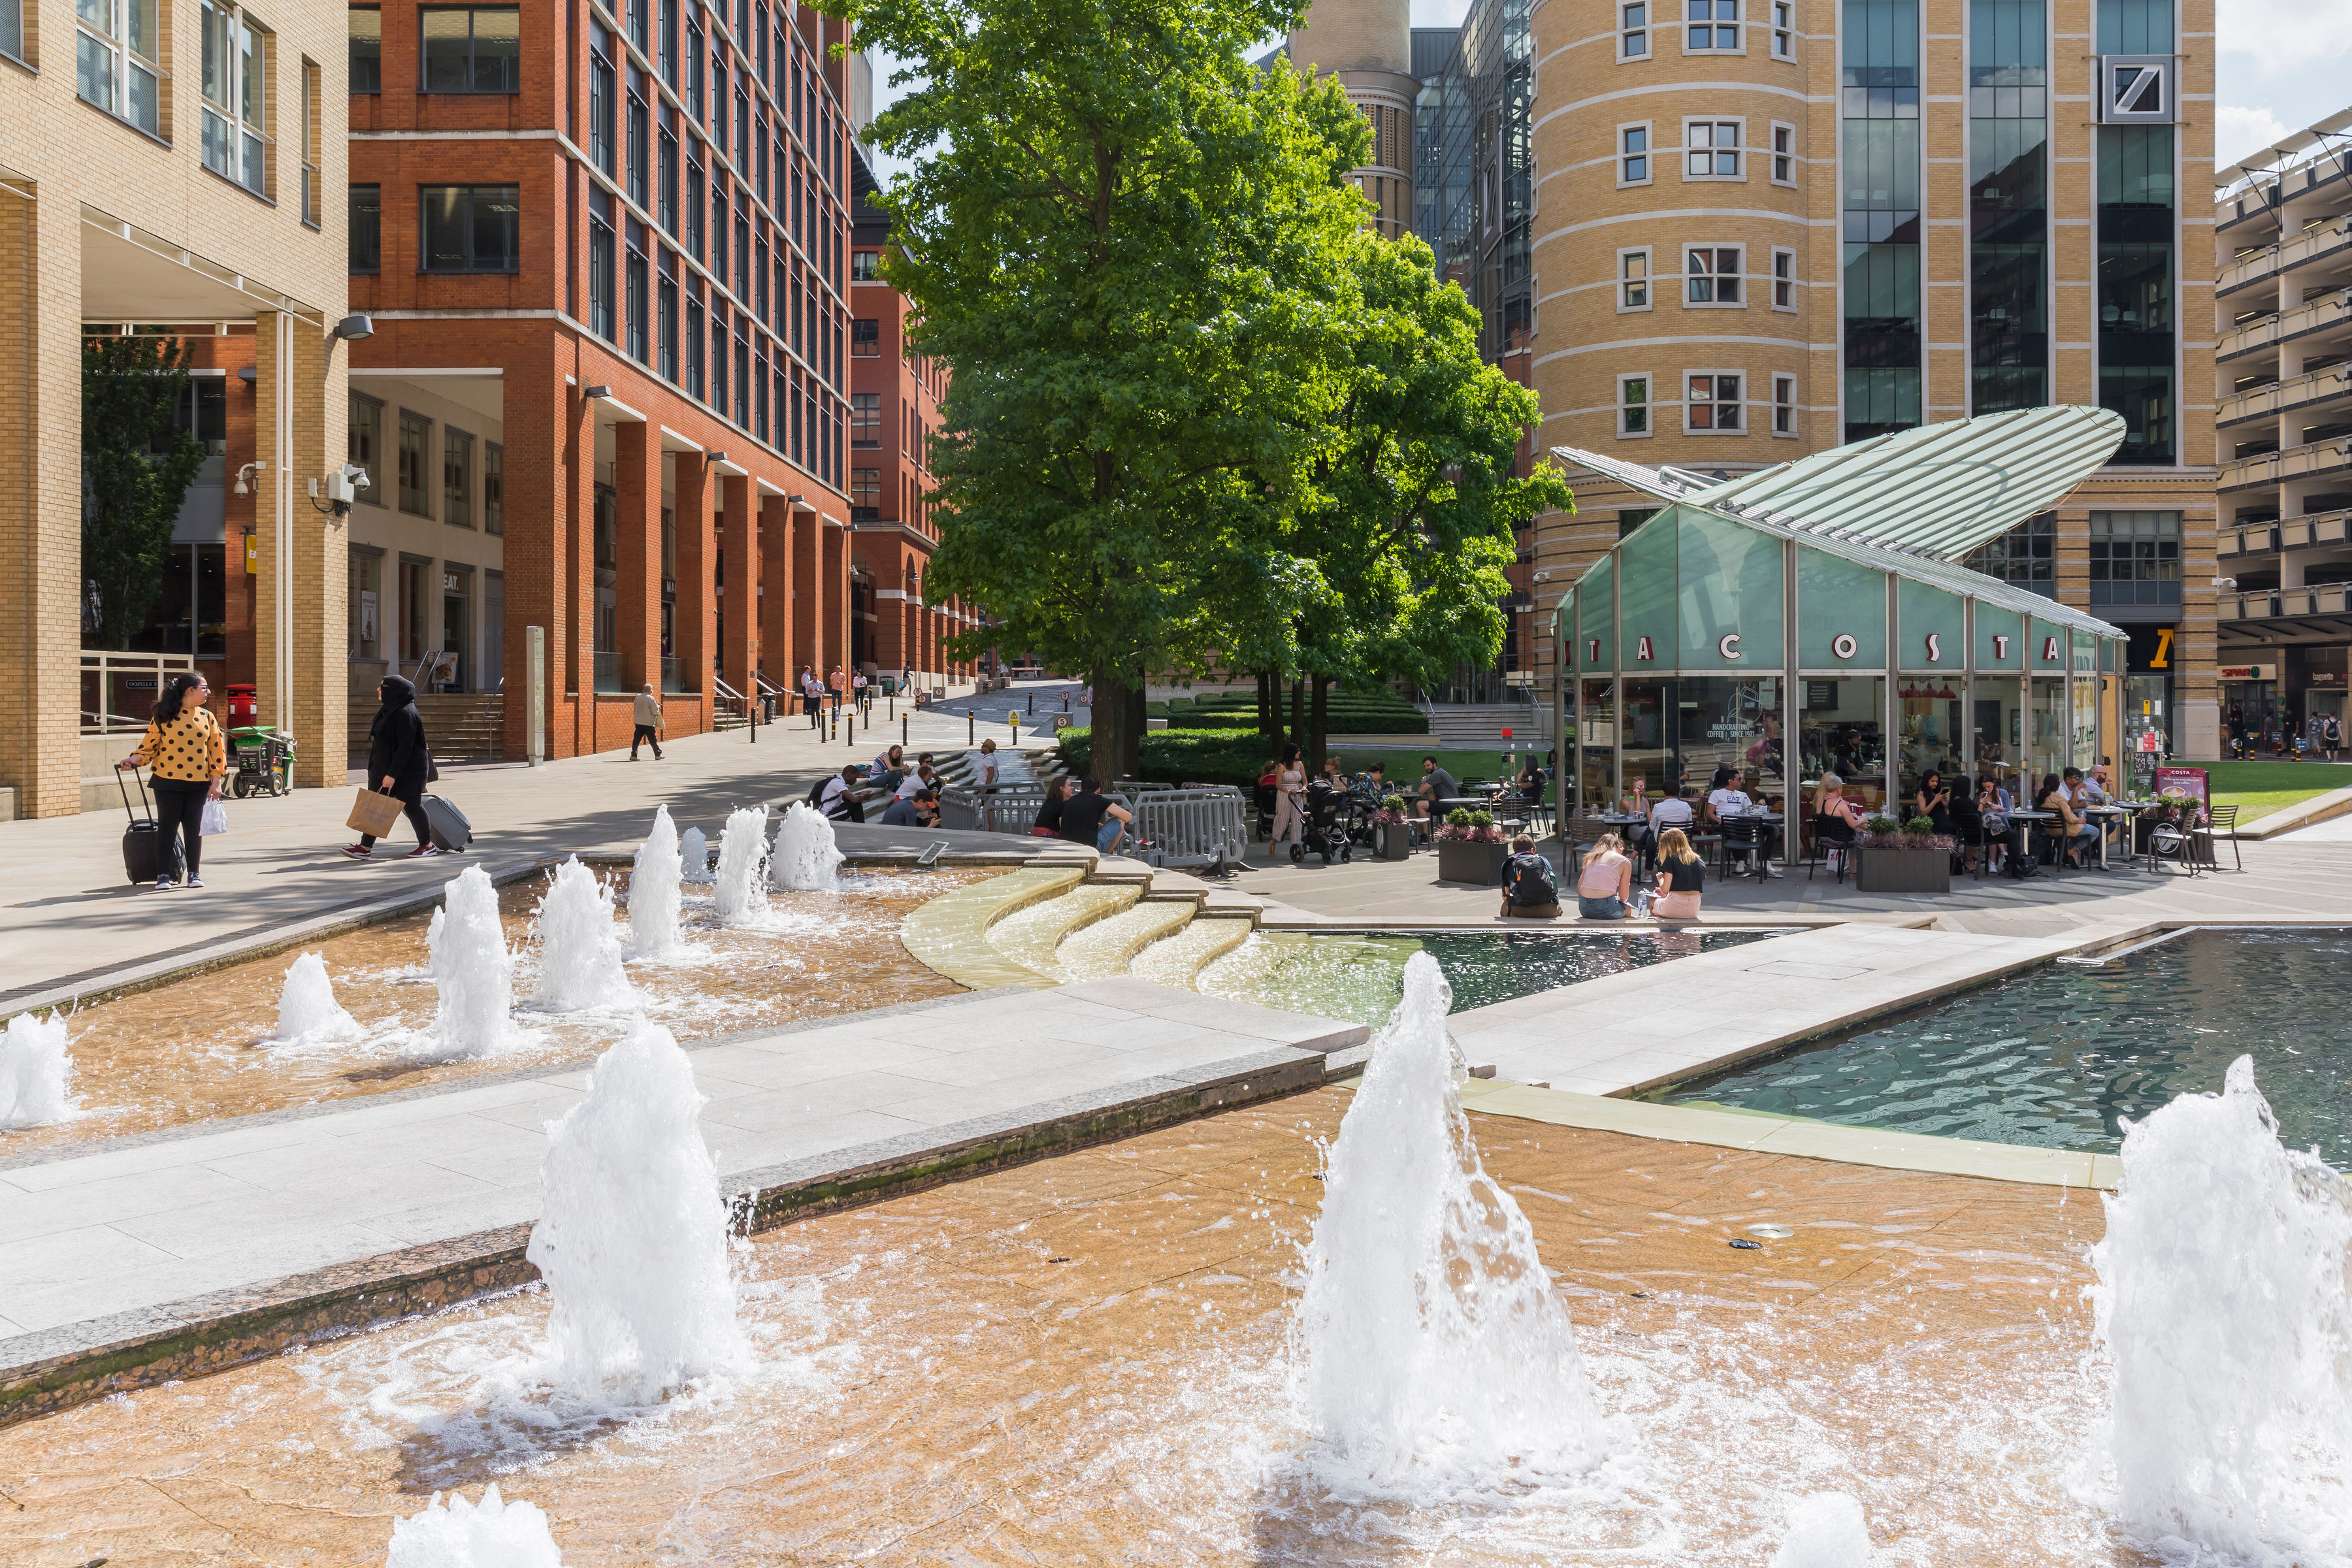 Fountains in Birmingham.